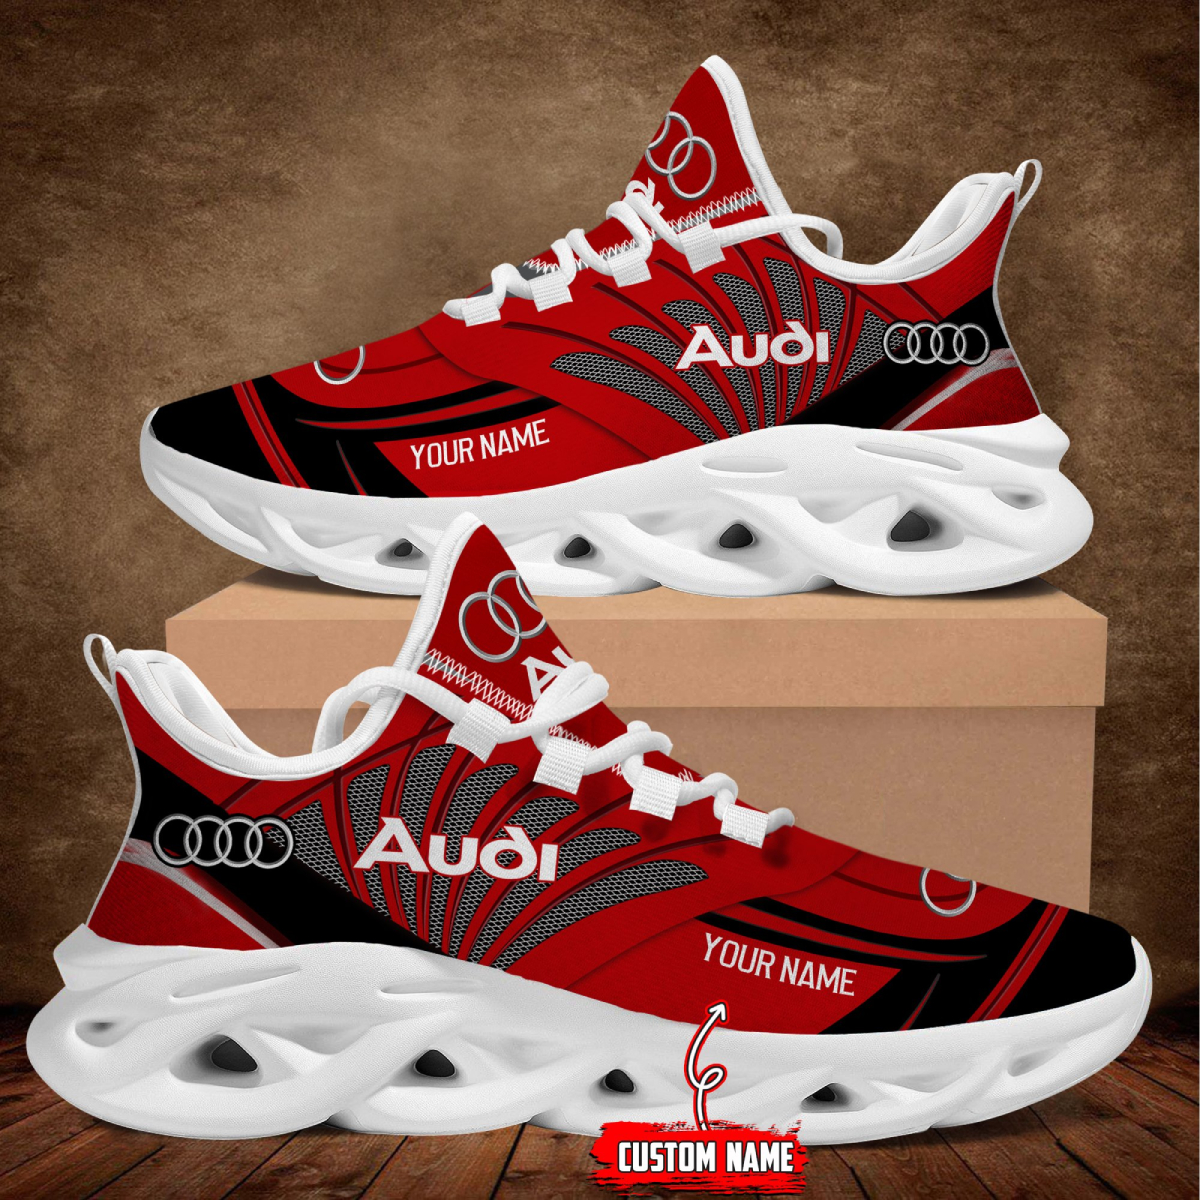 audi shoes – Compra audi shoes con envío gratis en AliExpress version